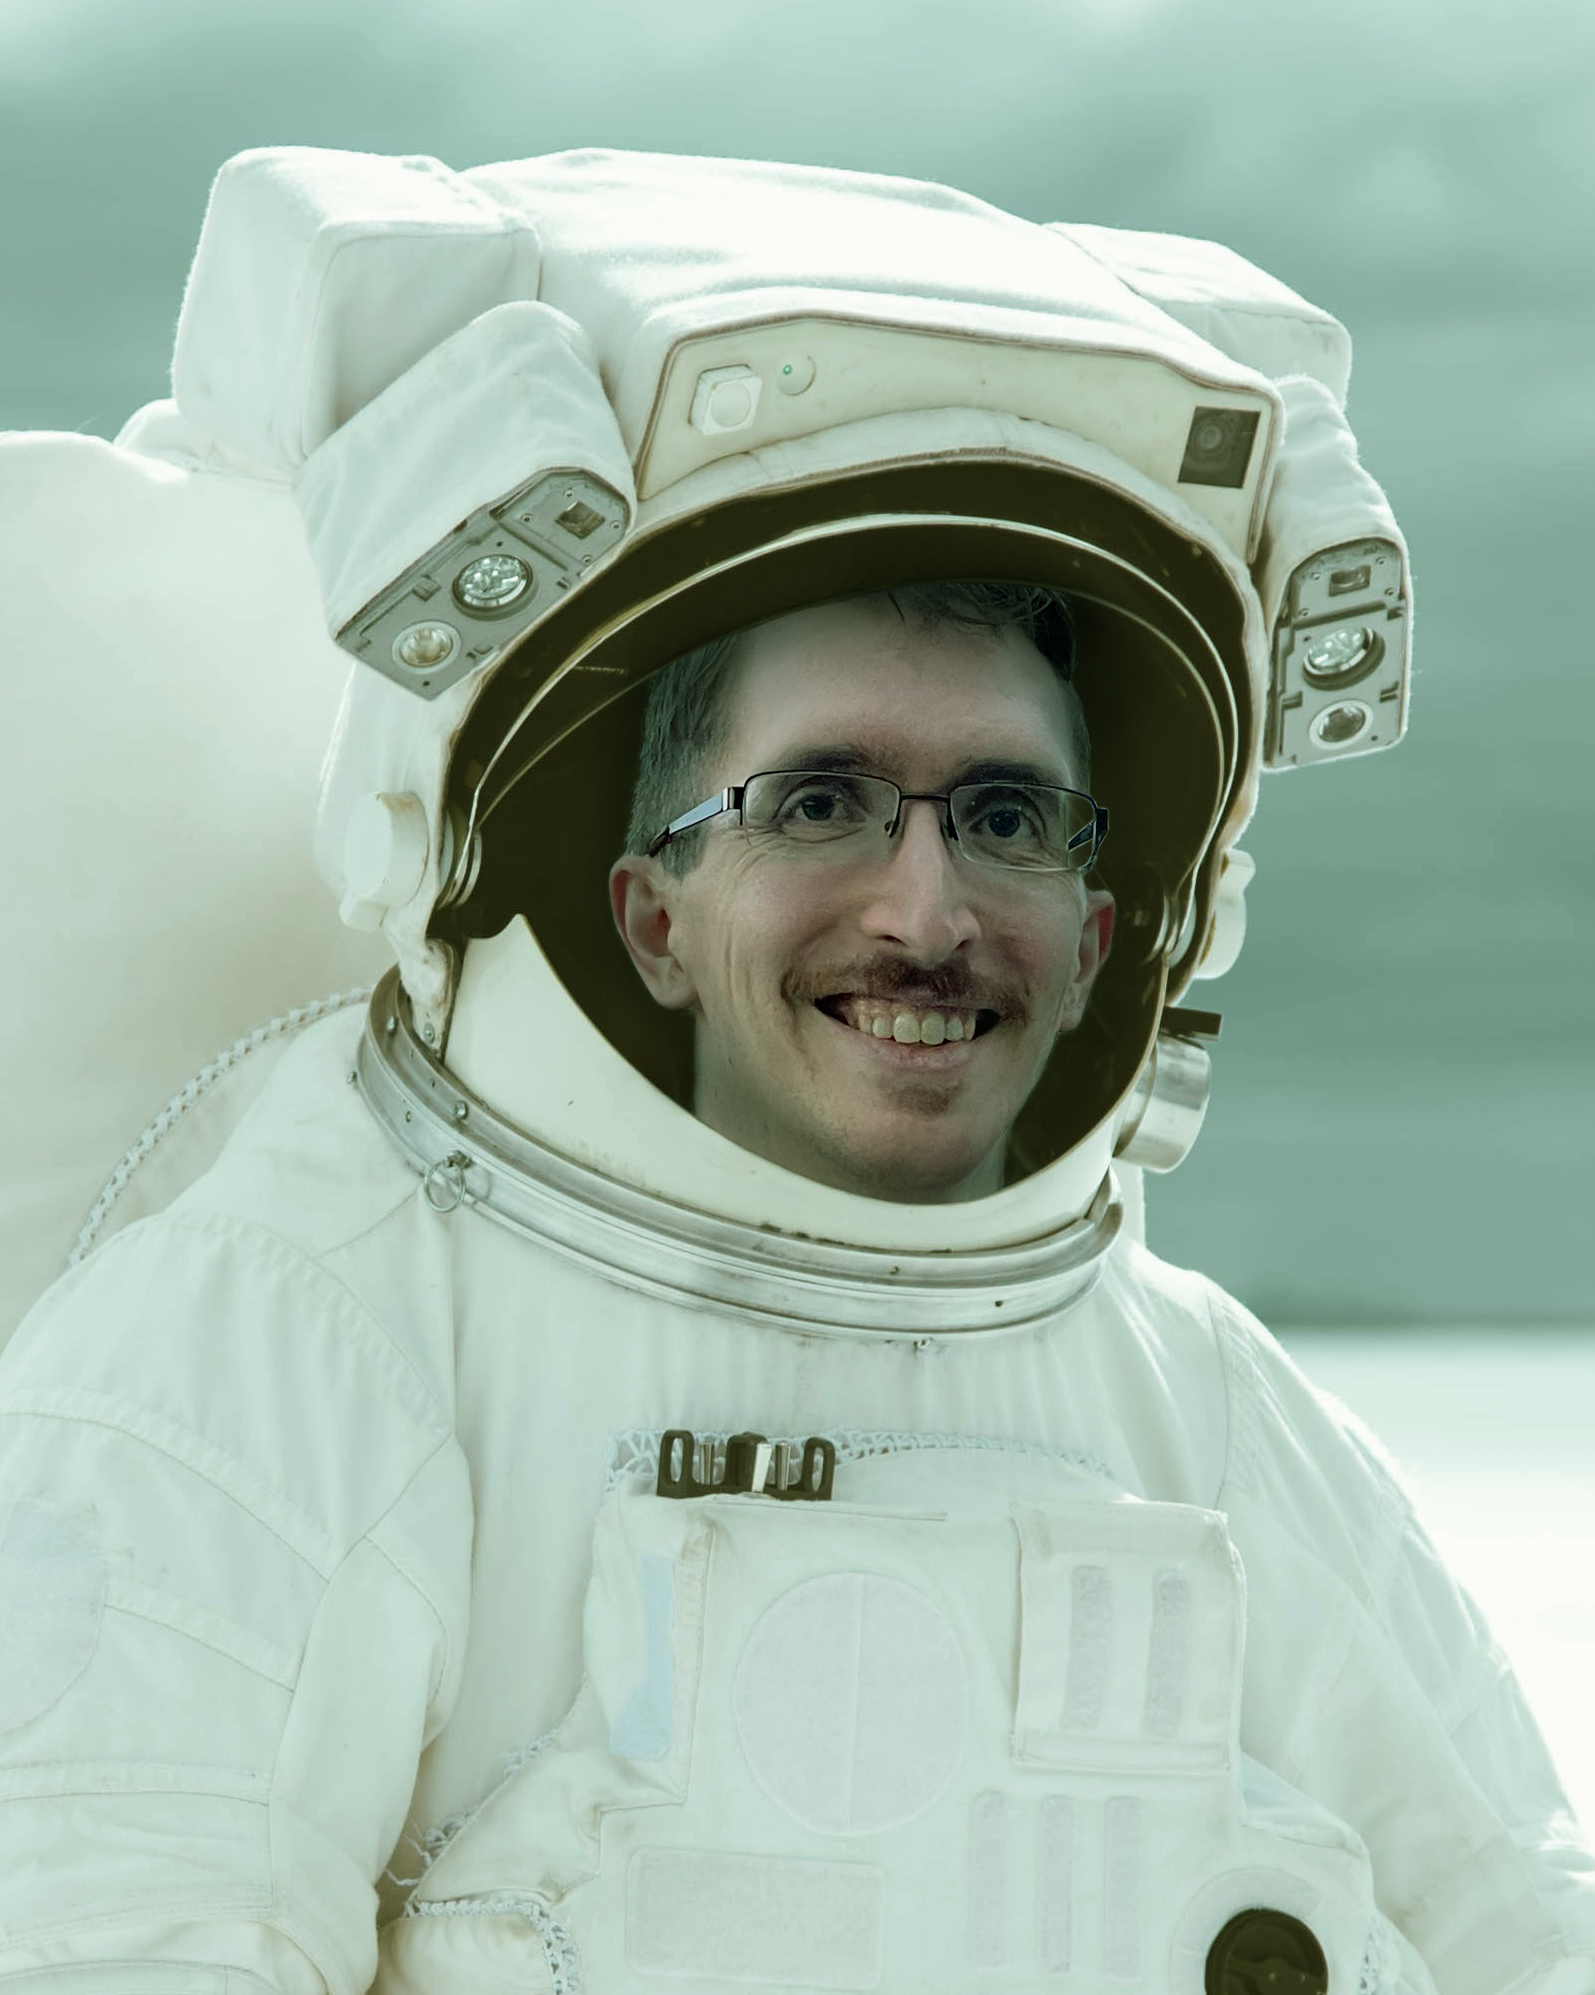 Benny Mattis in a spacesuit